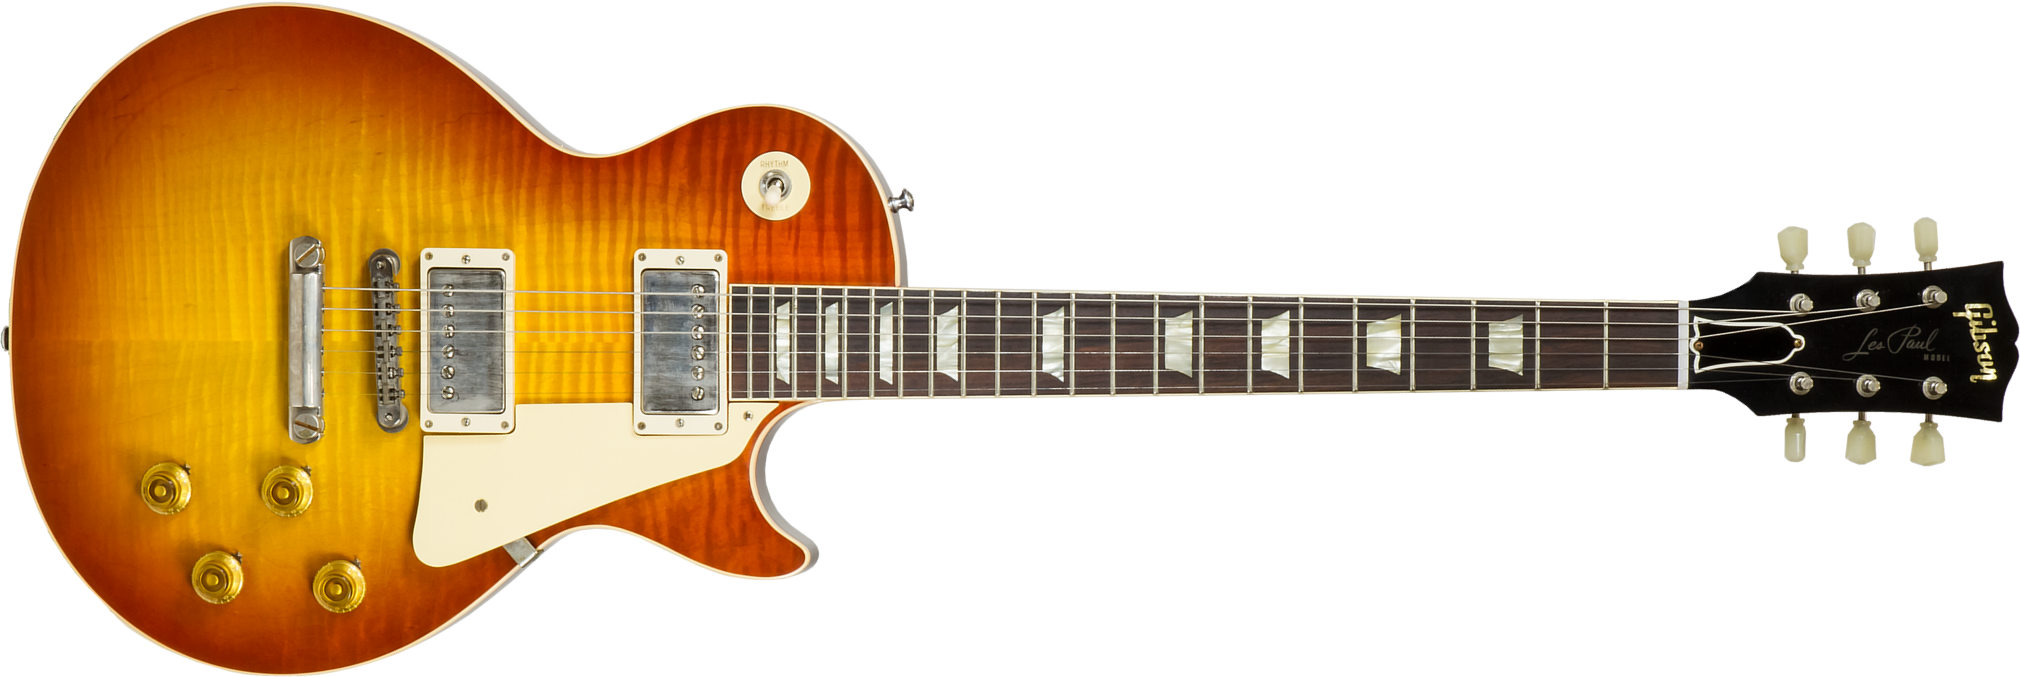 Gibson Custom Shop Les Paul Standard 1960 V1 60th Anniversary #001496 - Vos Antiquity Burst - Enkel gesneden elektrische gitaar - Main picture